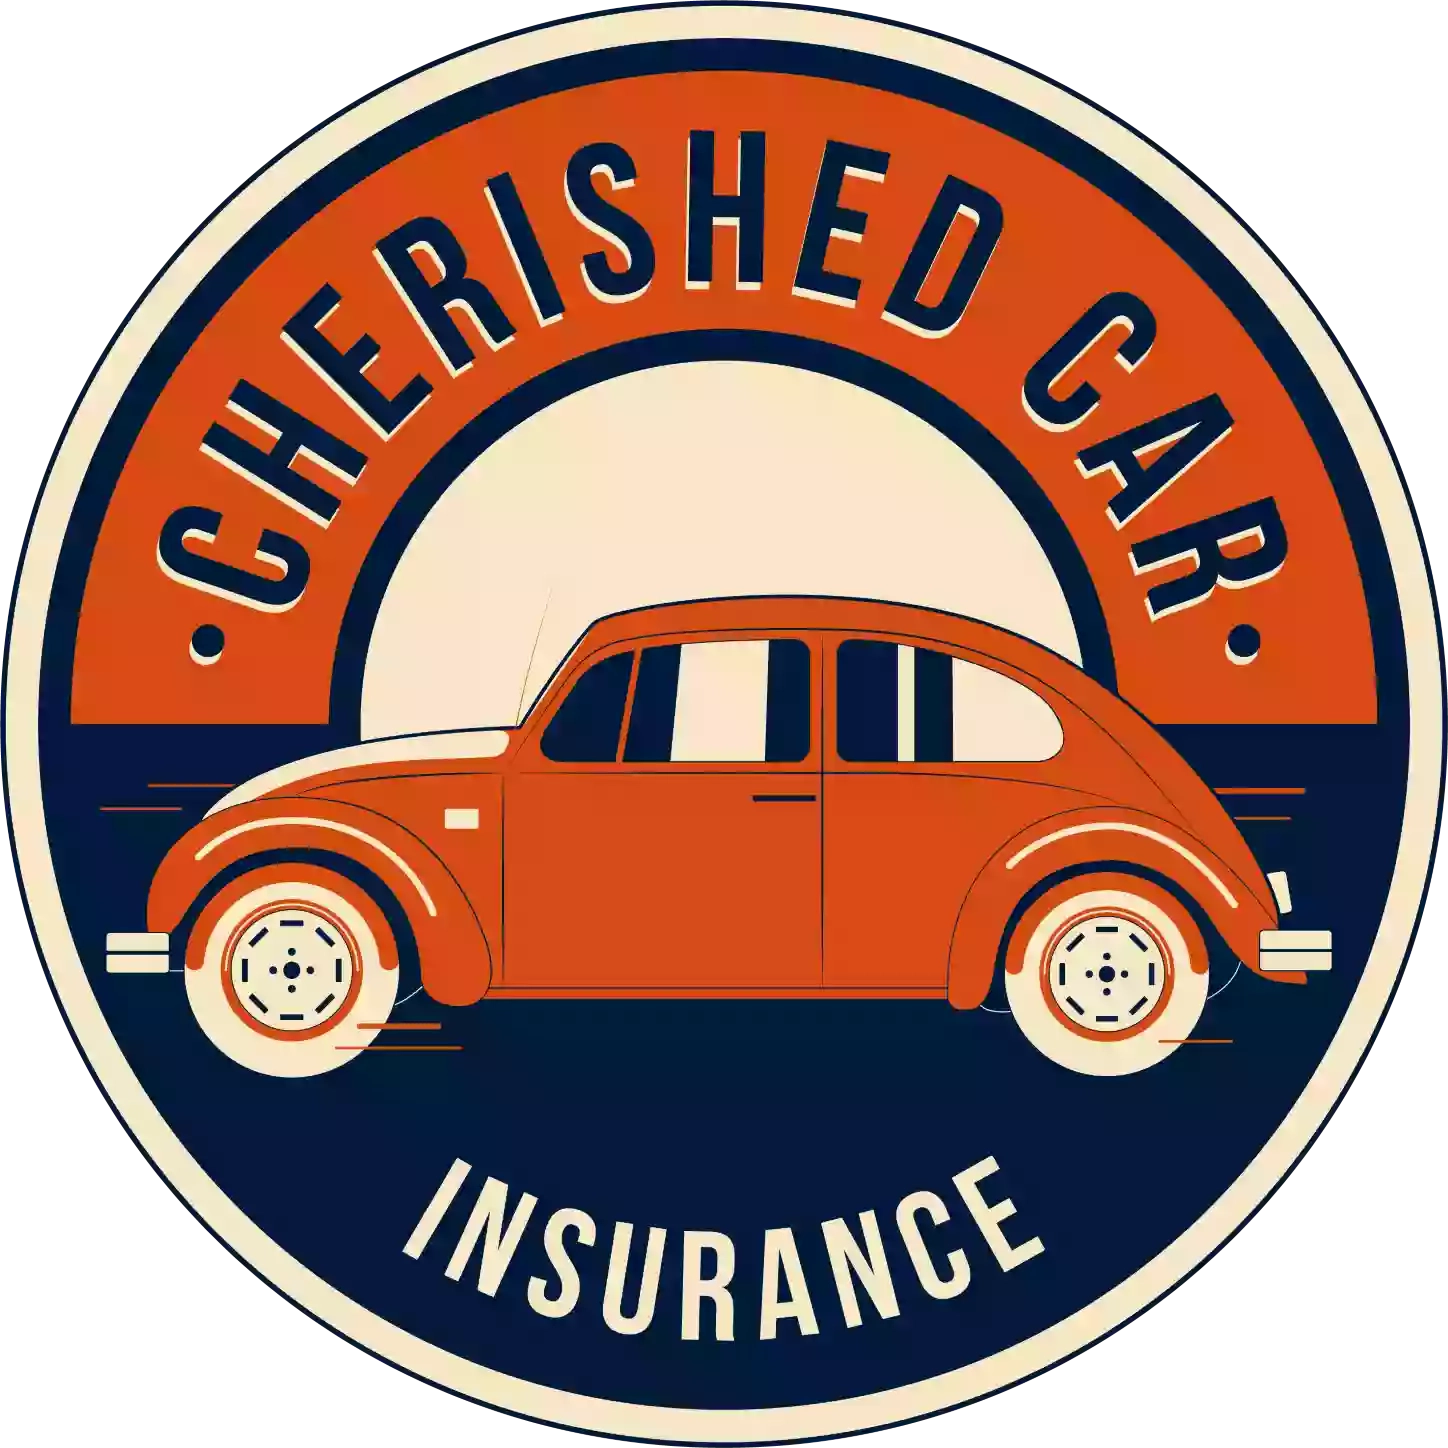 Cherished Car Insurance